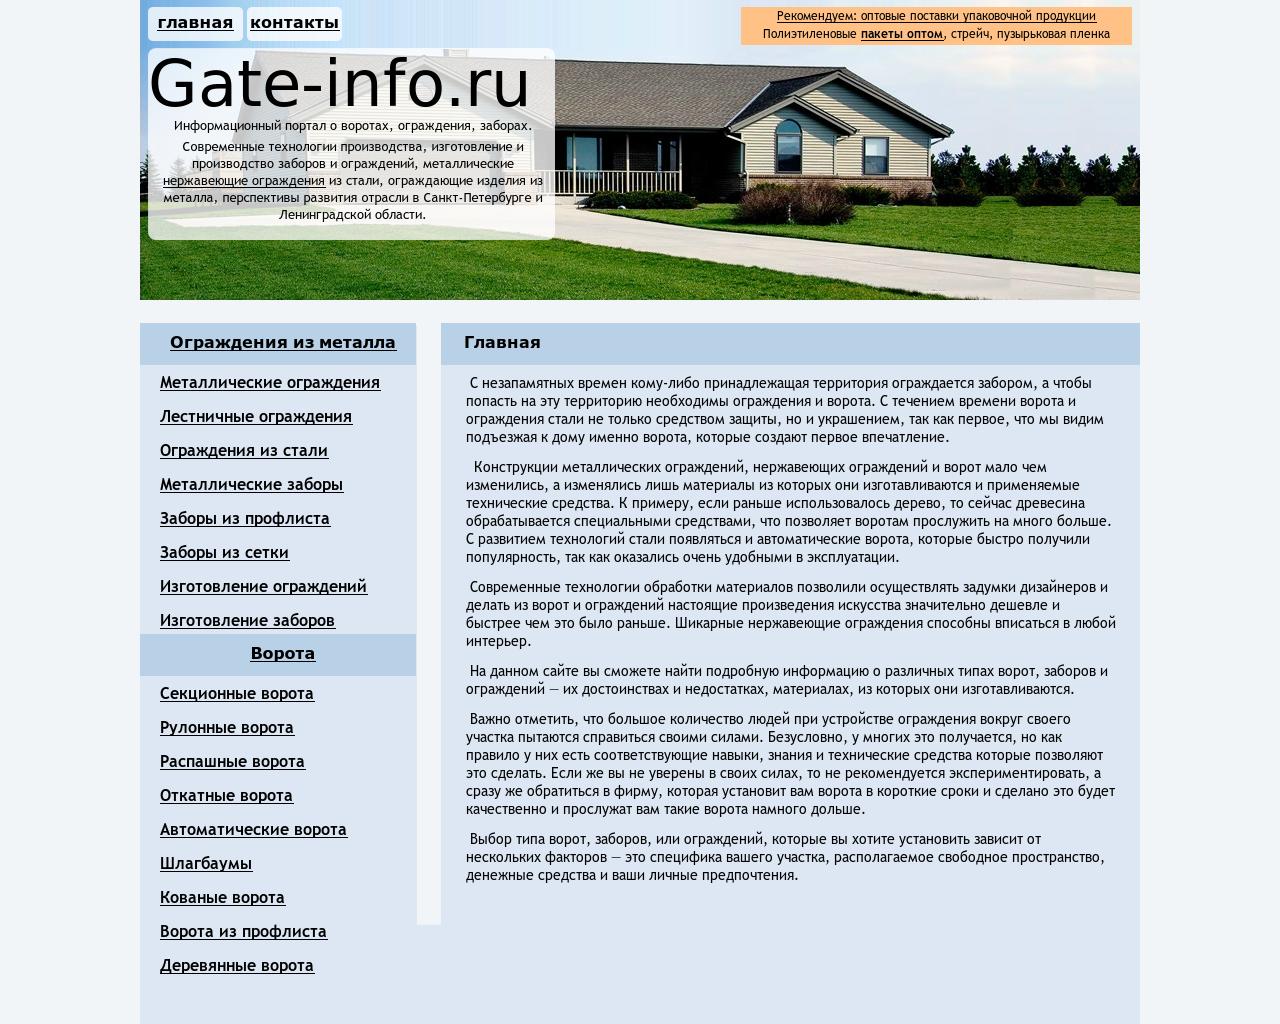 Изображение сайта gate-info.ru в разрешении 1280x1024